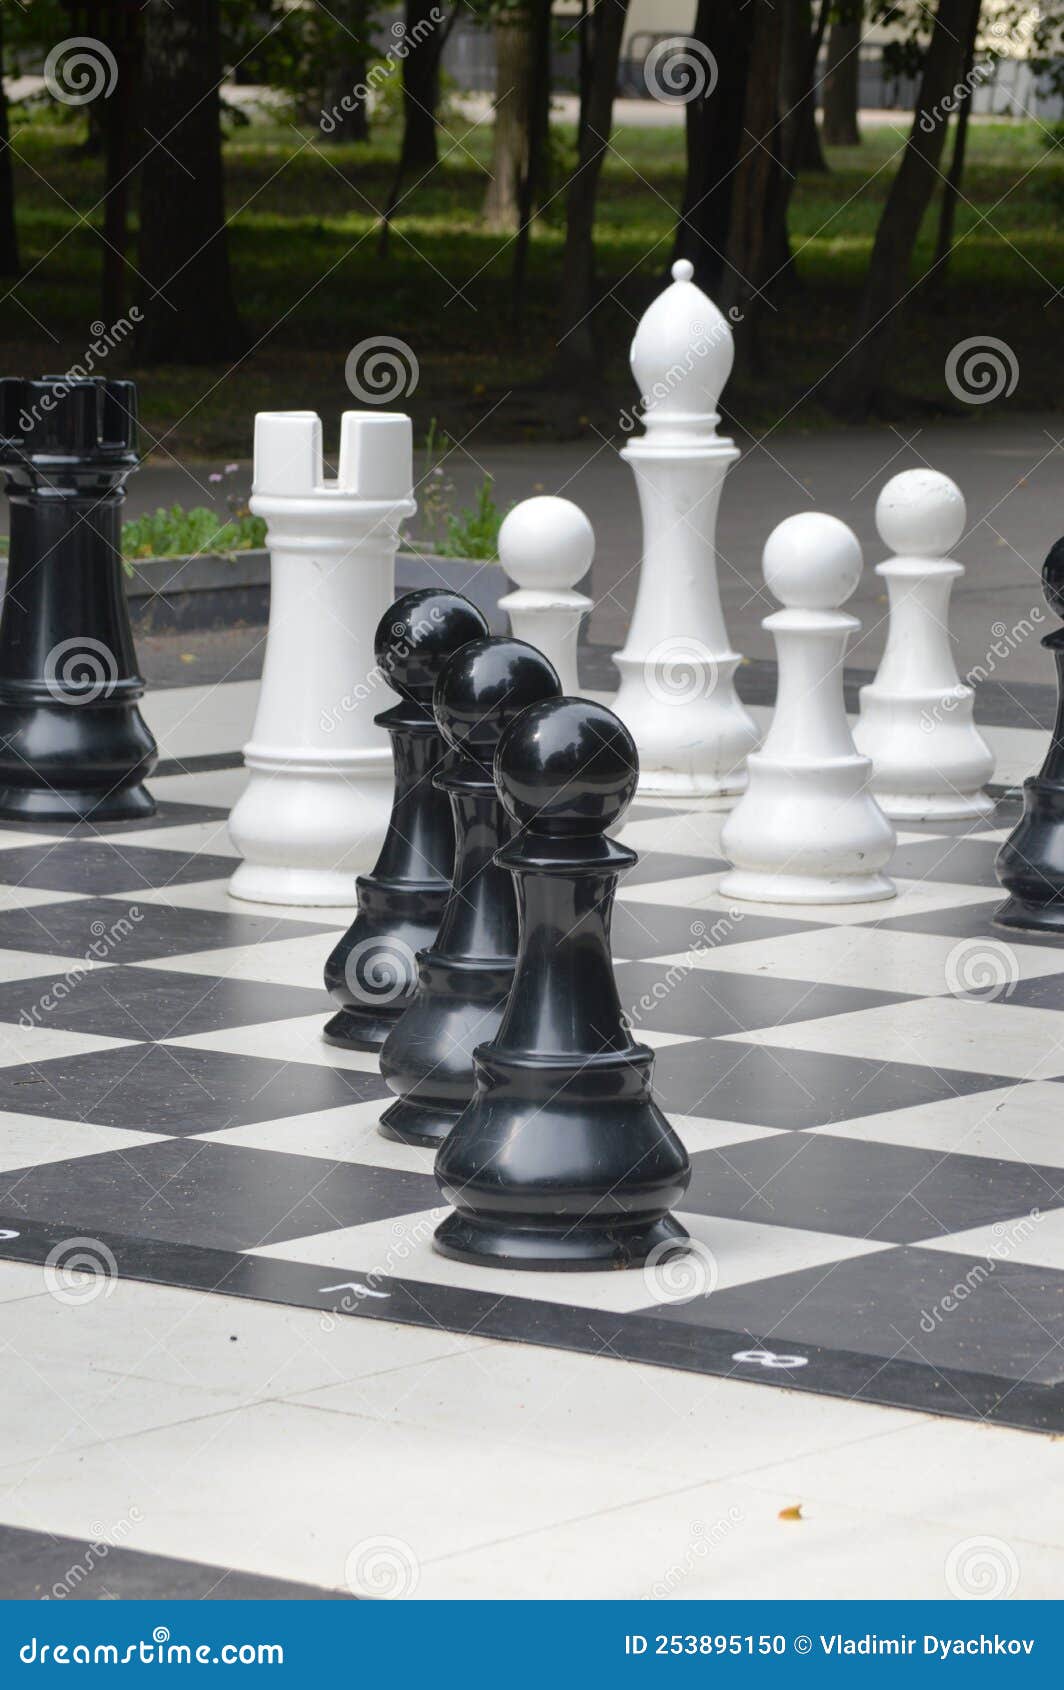 large decorative chess